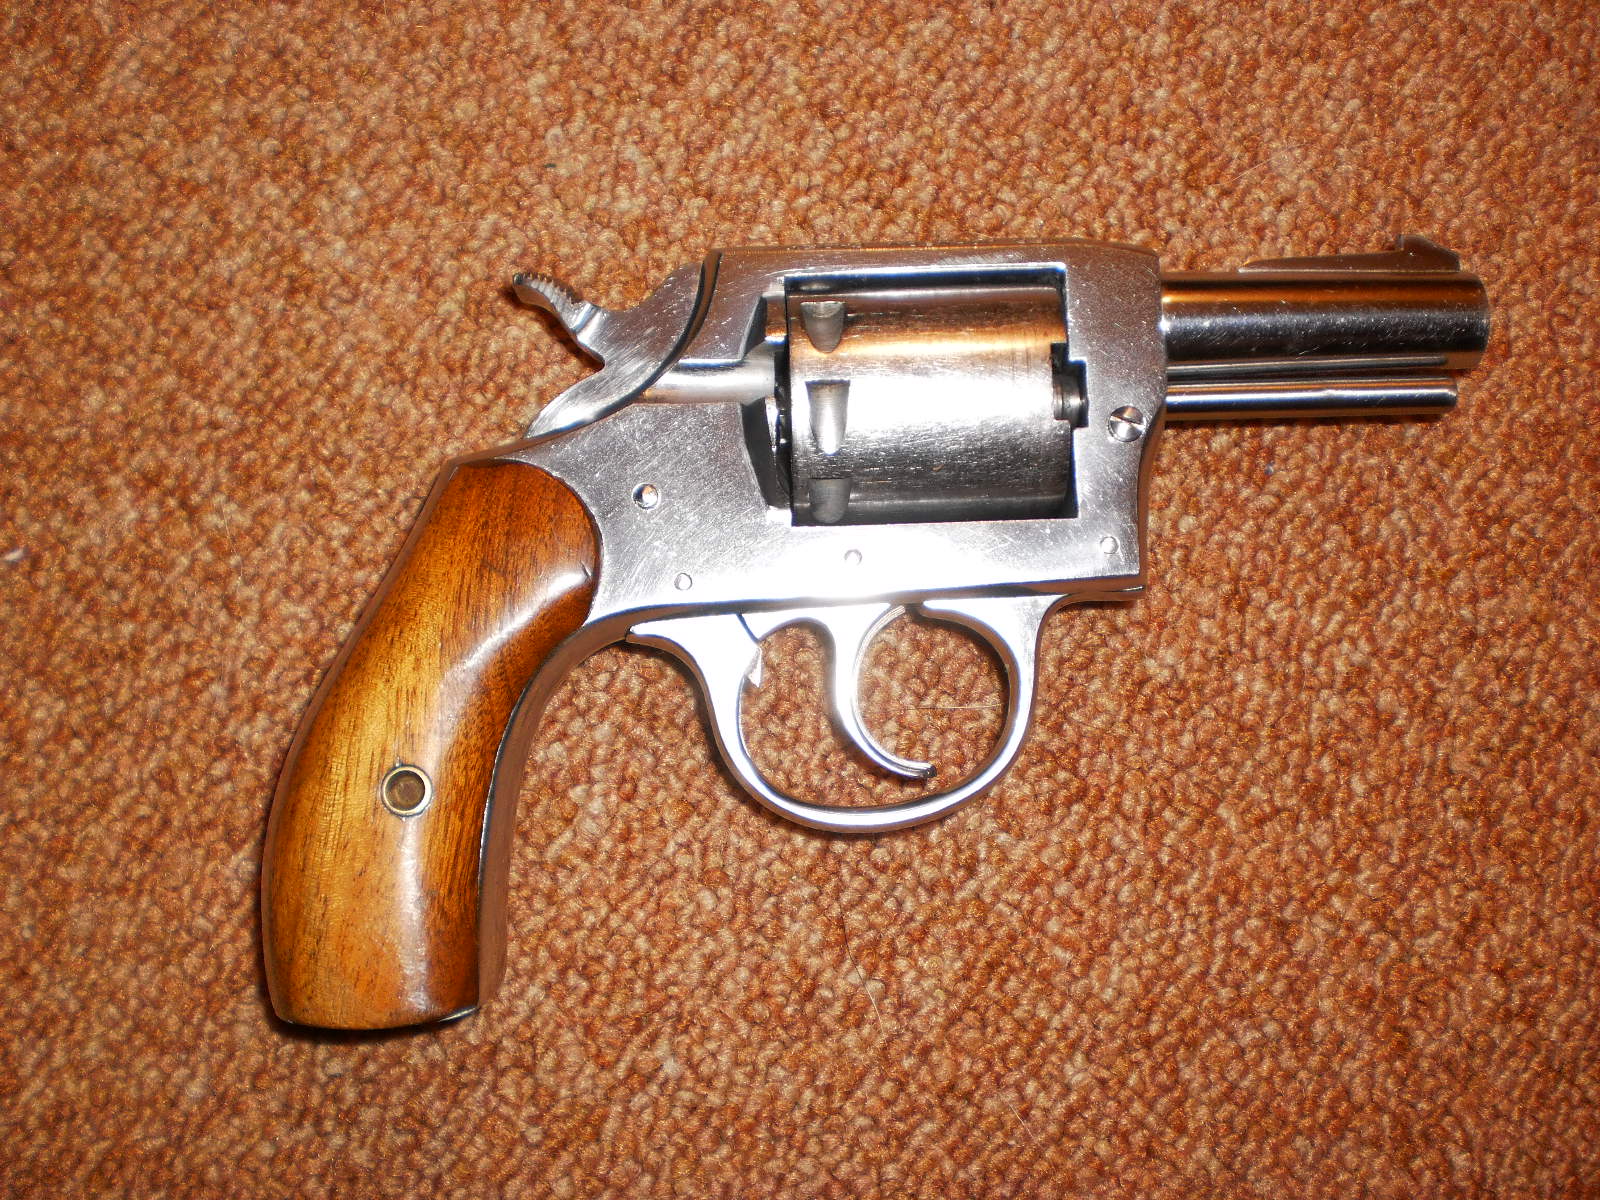 Iver Johnson Revolver